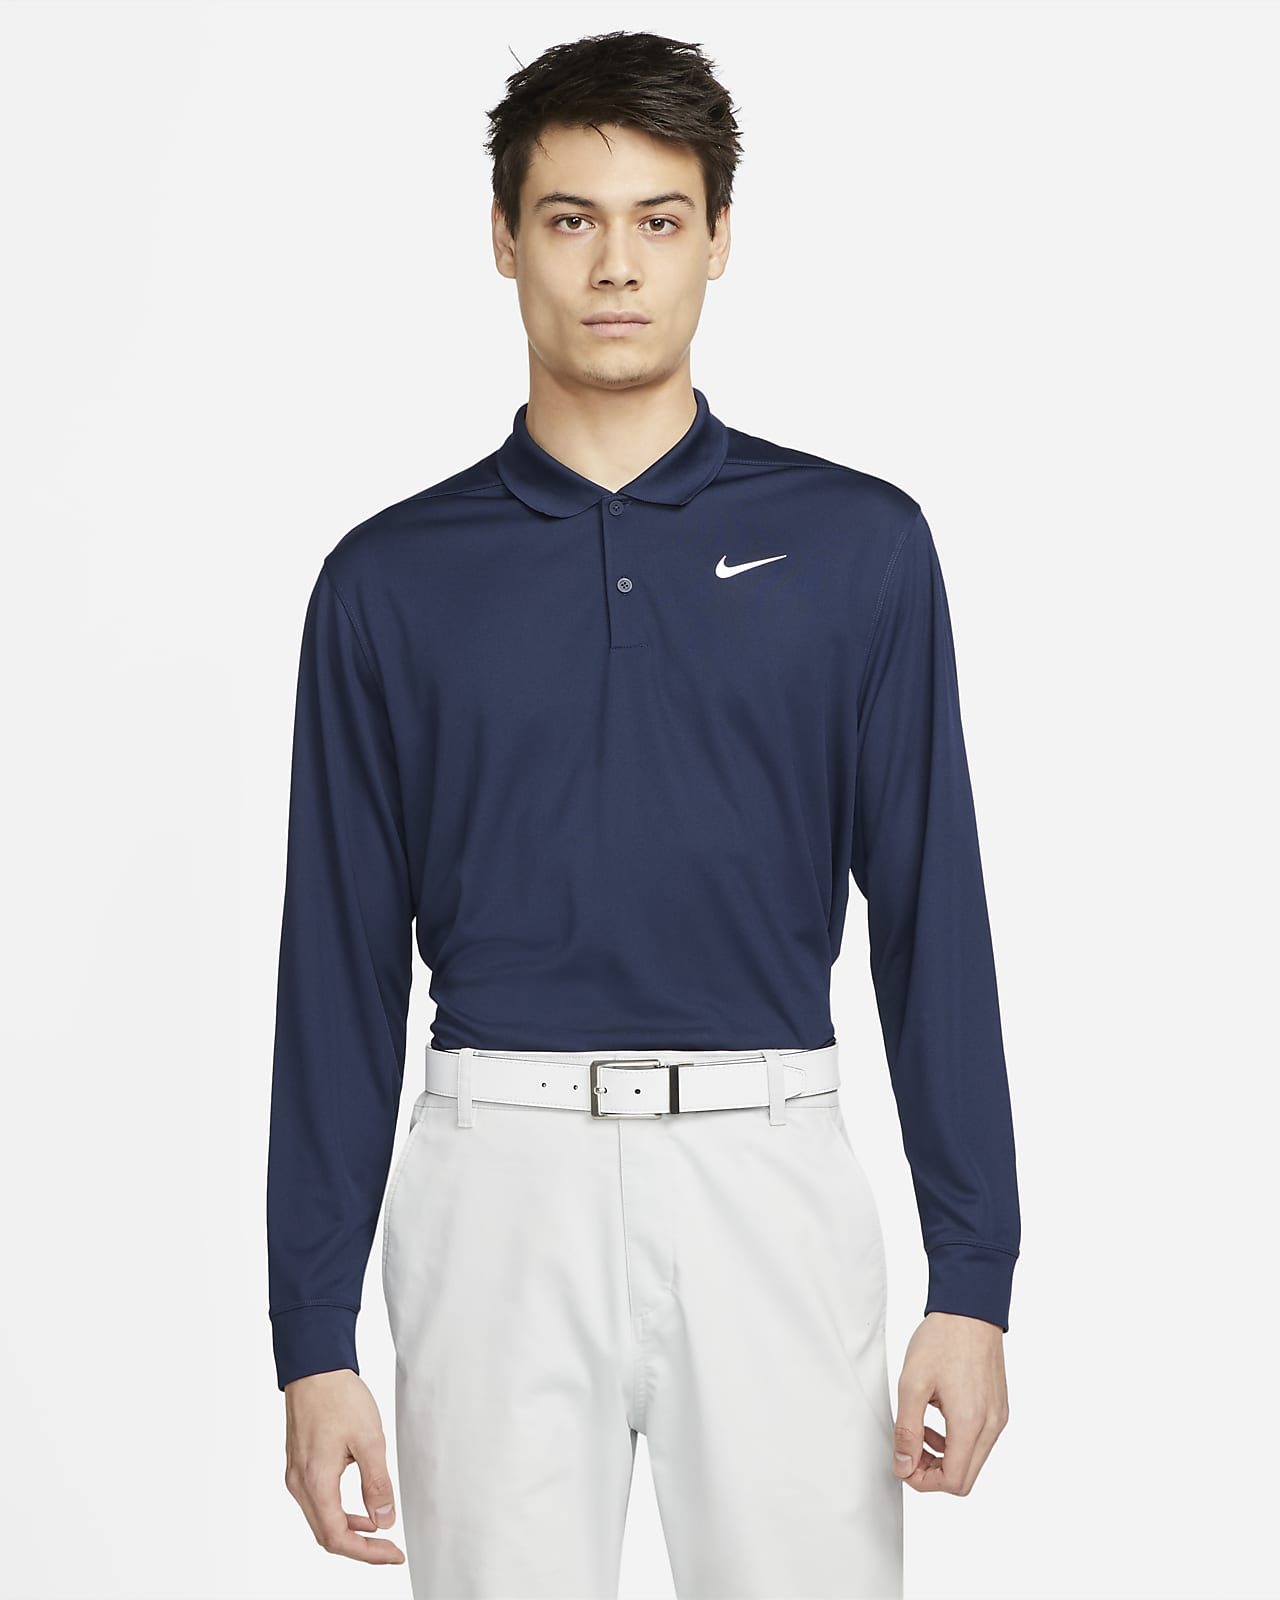 Golf Skirts & Dresses. Nike CA